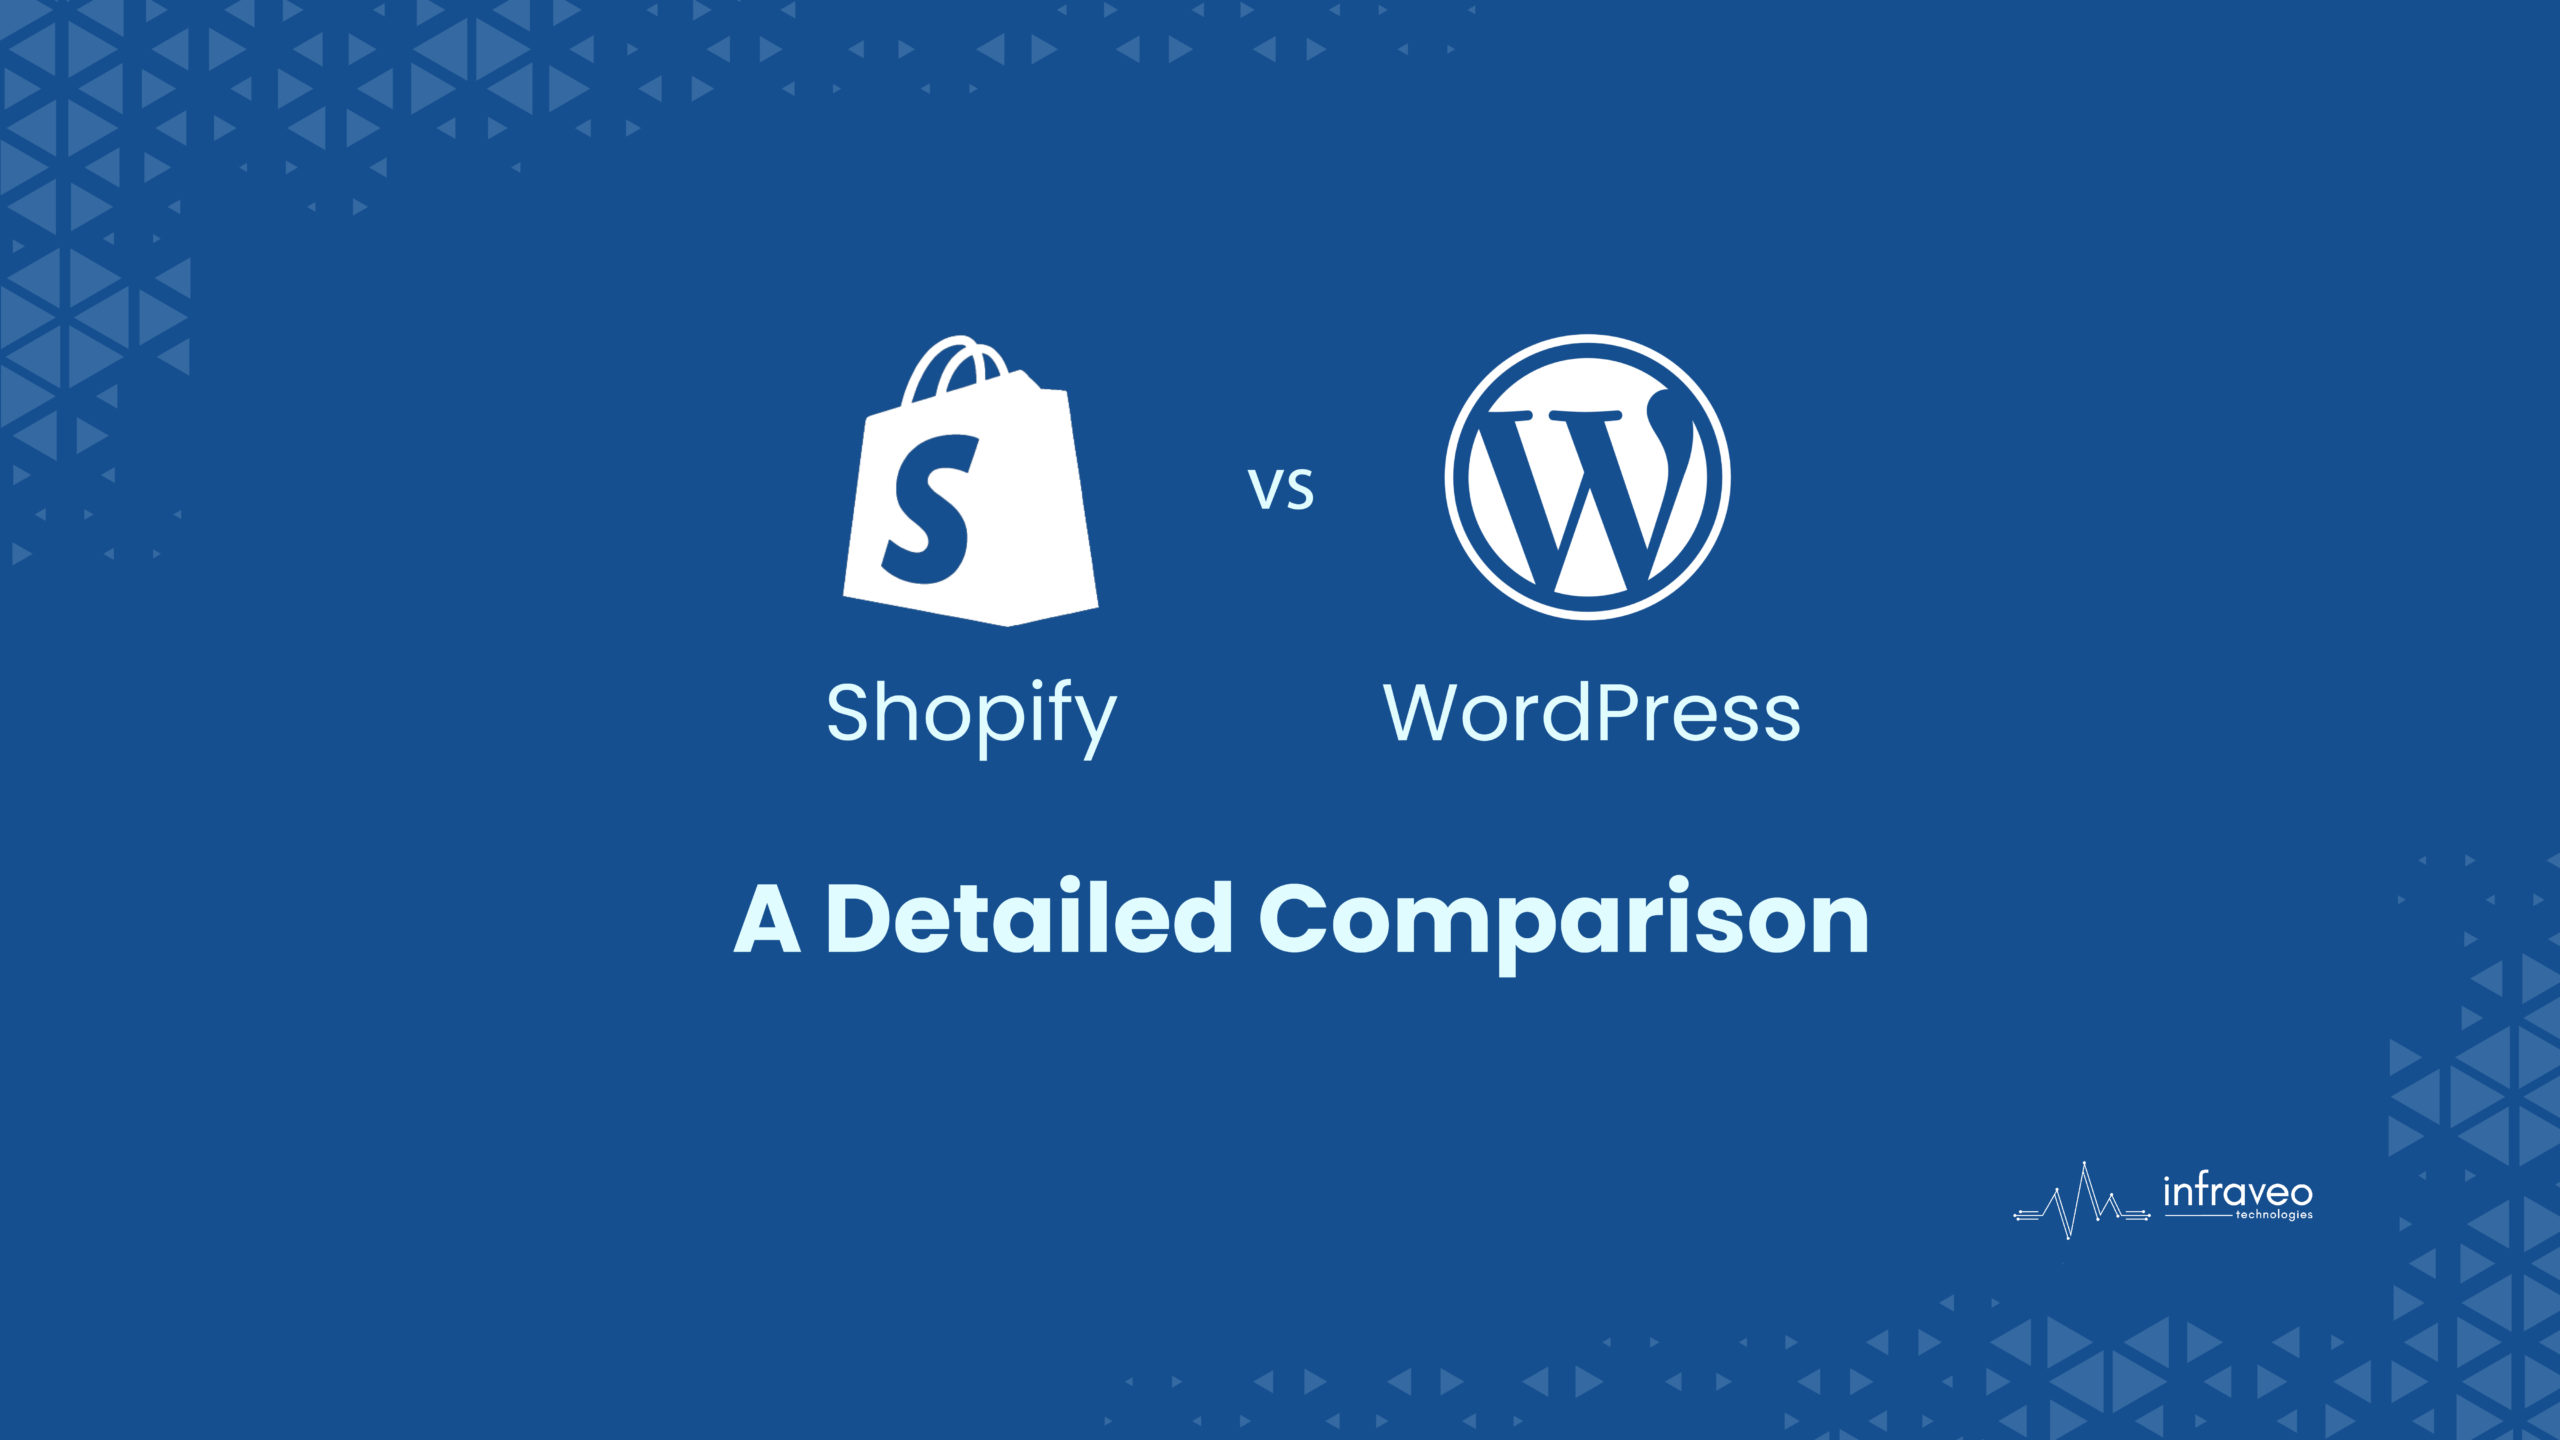 Shopify vs Wordpress Blog Image